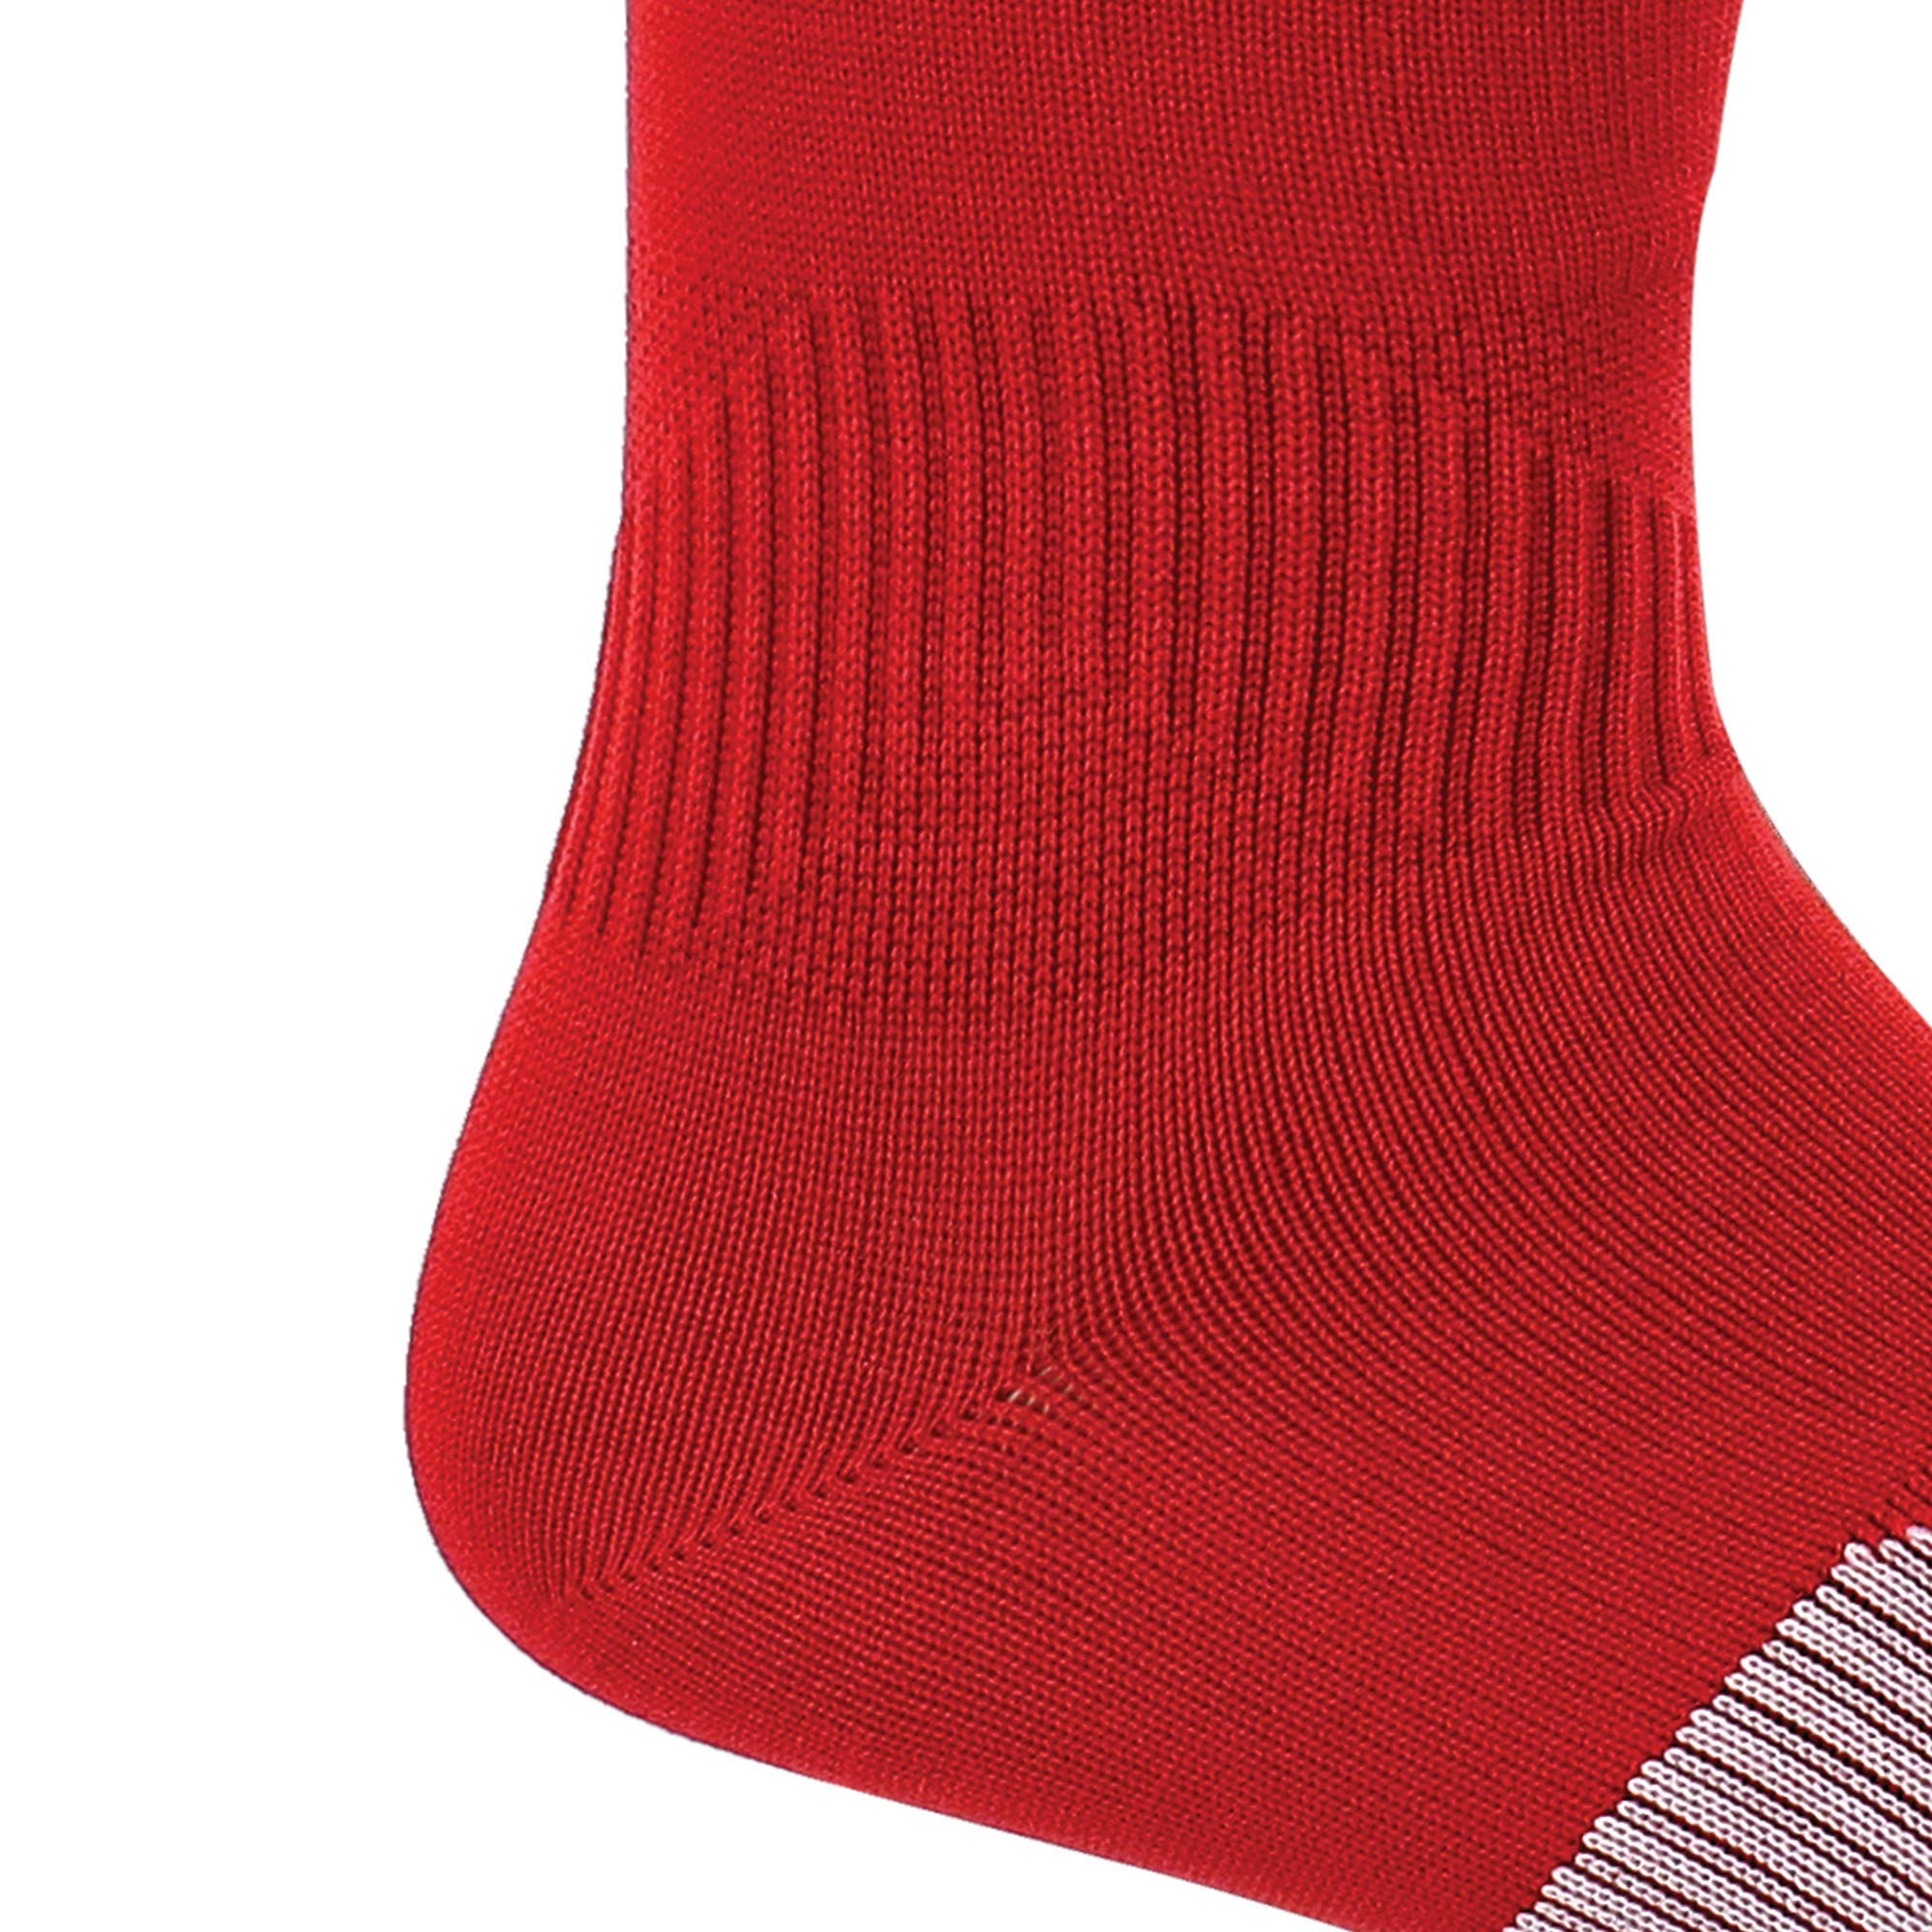 adidas Metro 4 Soccer Socks for Boys, Girls, Men and Women (1-Pair), Power Red/White/Clear Grey, Large